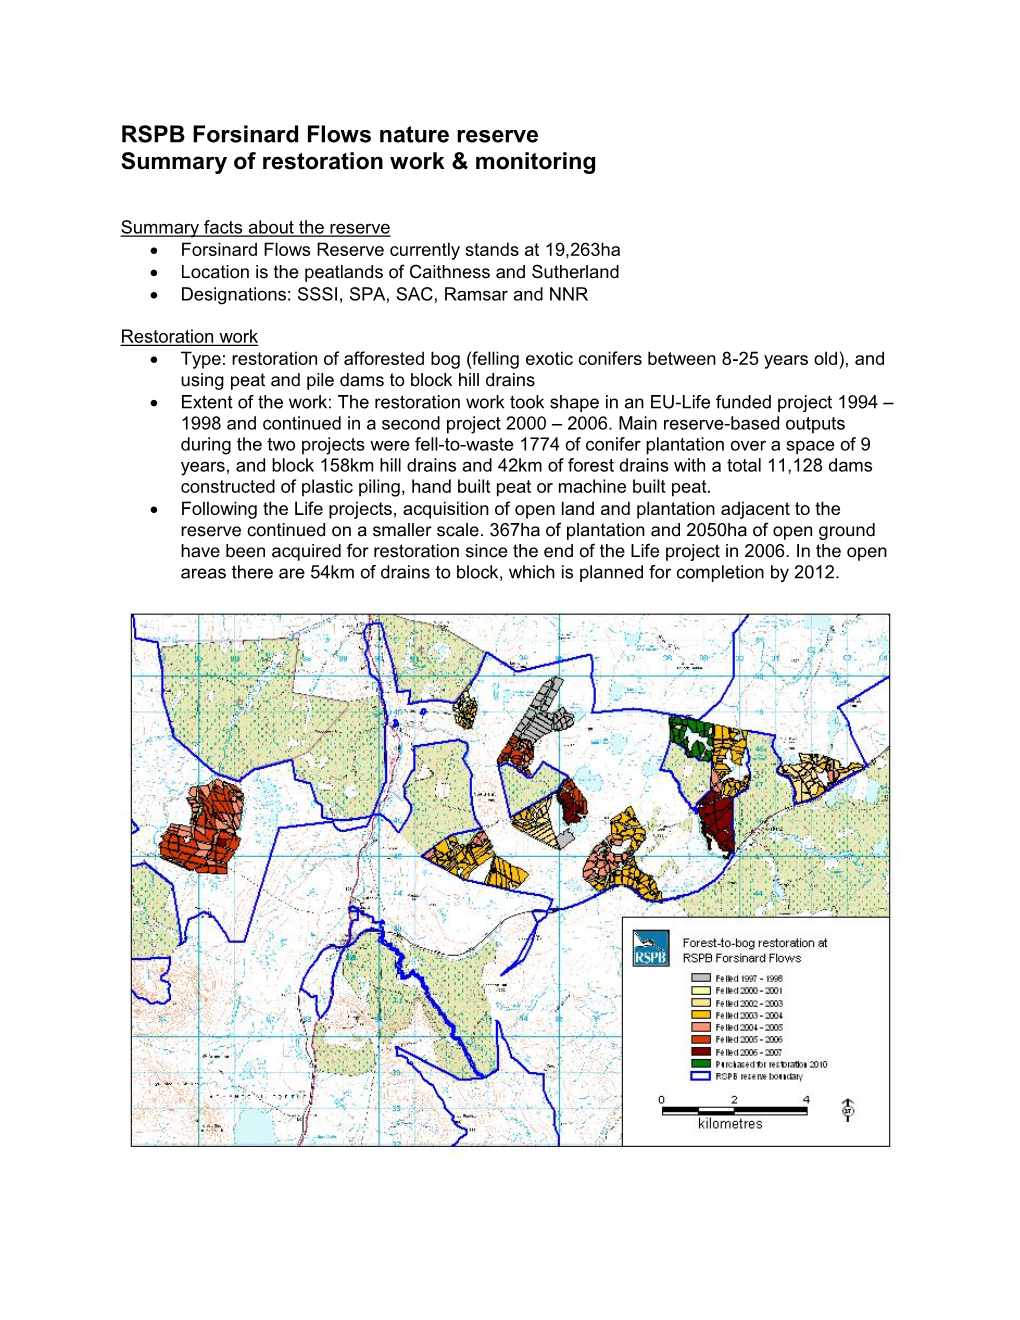 RSPB Forsinard Flows Nature Reserve Summary of Restoration Work & Monitoring